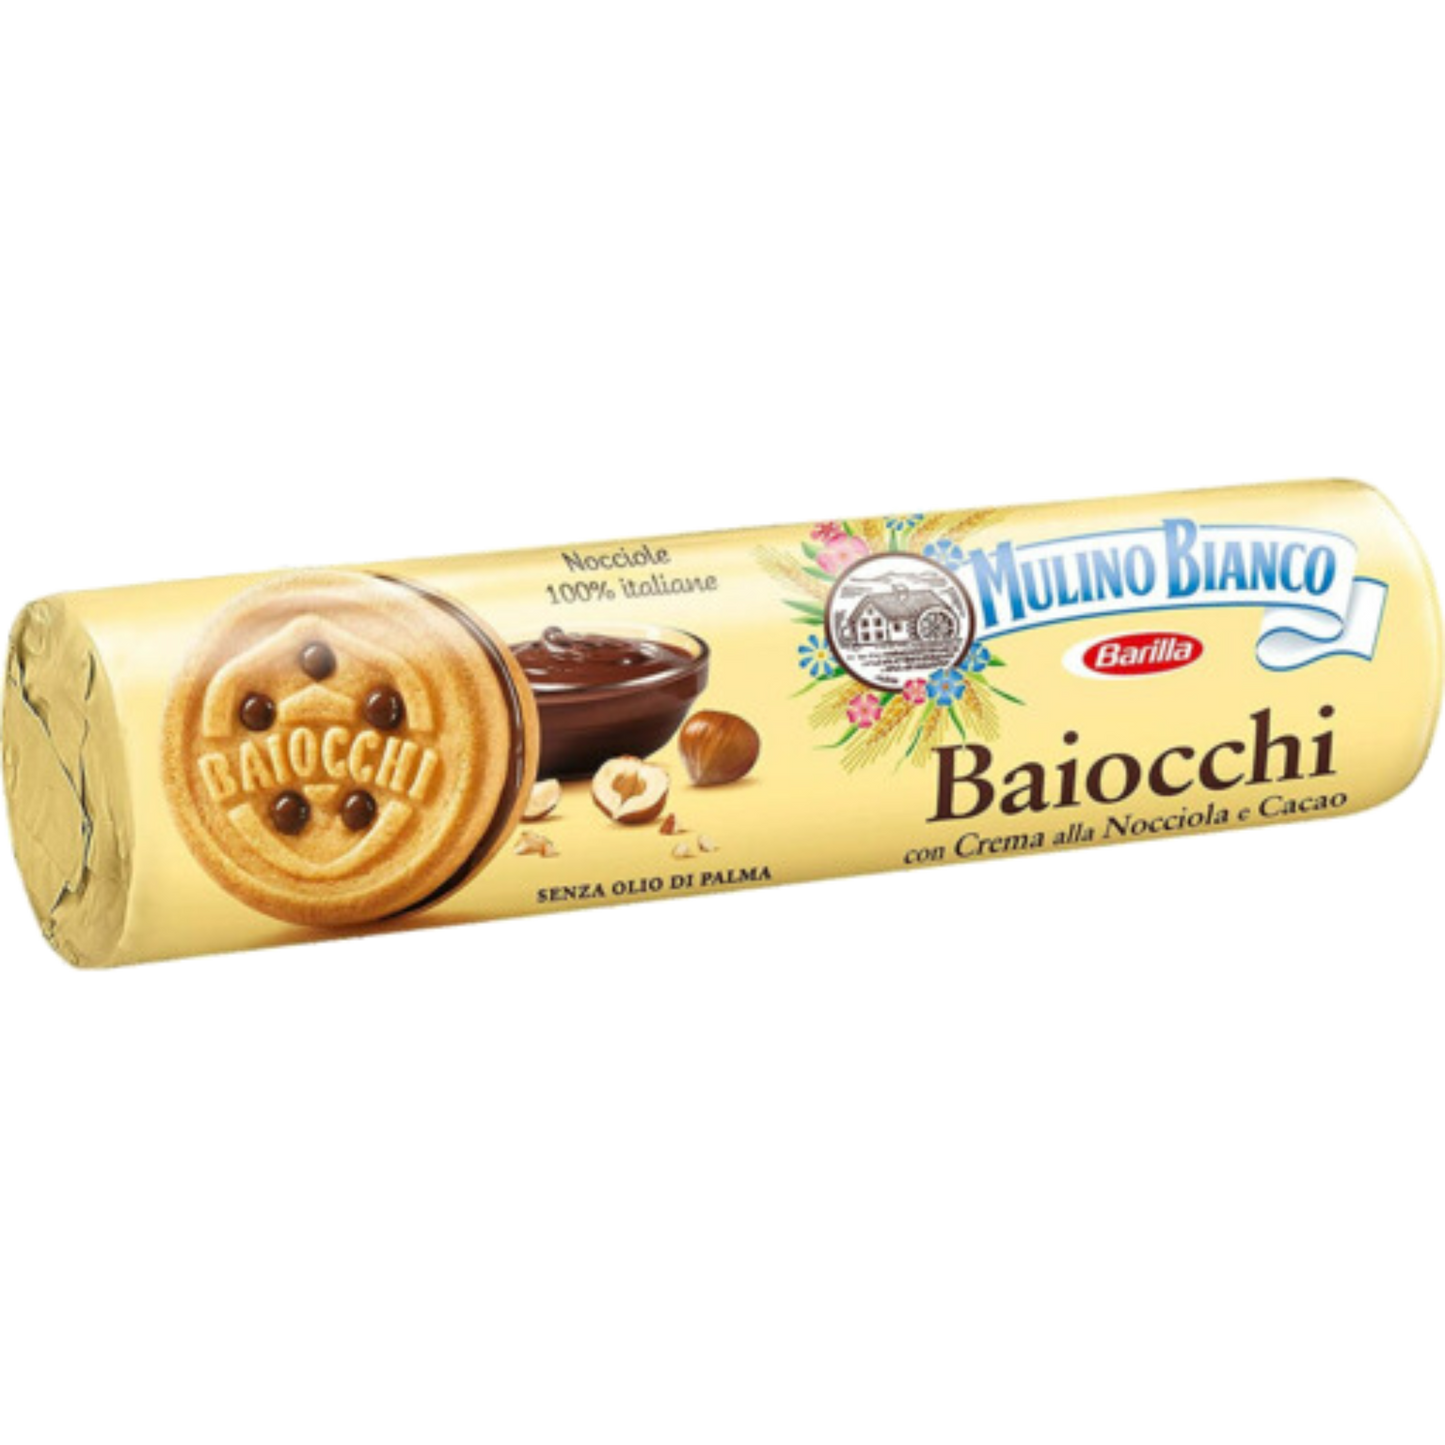 Baiocchi 168g